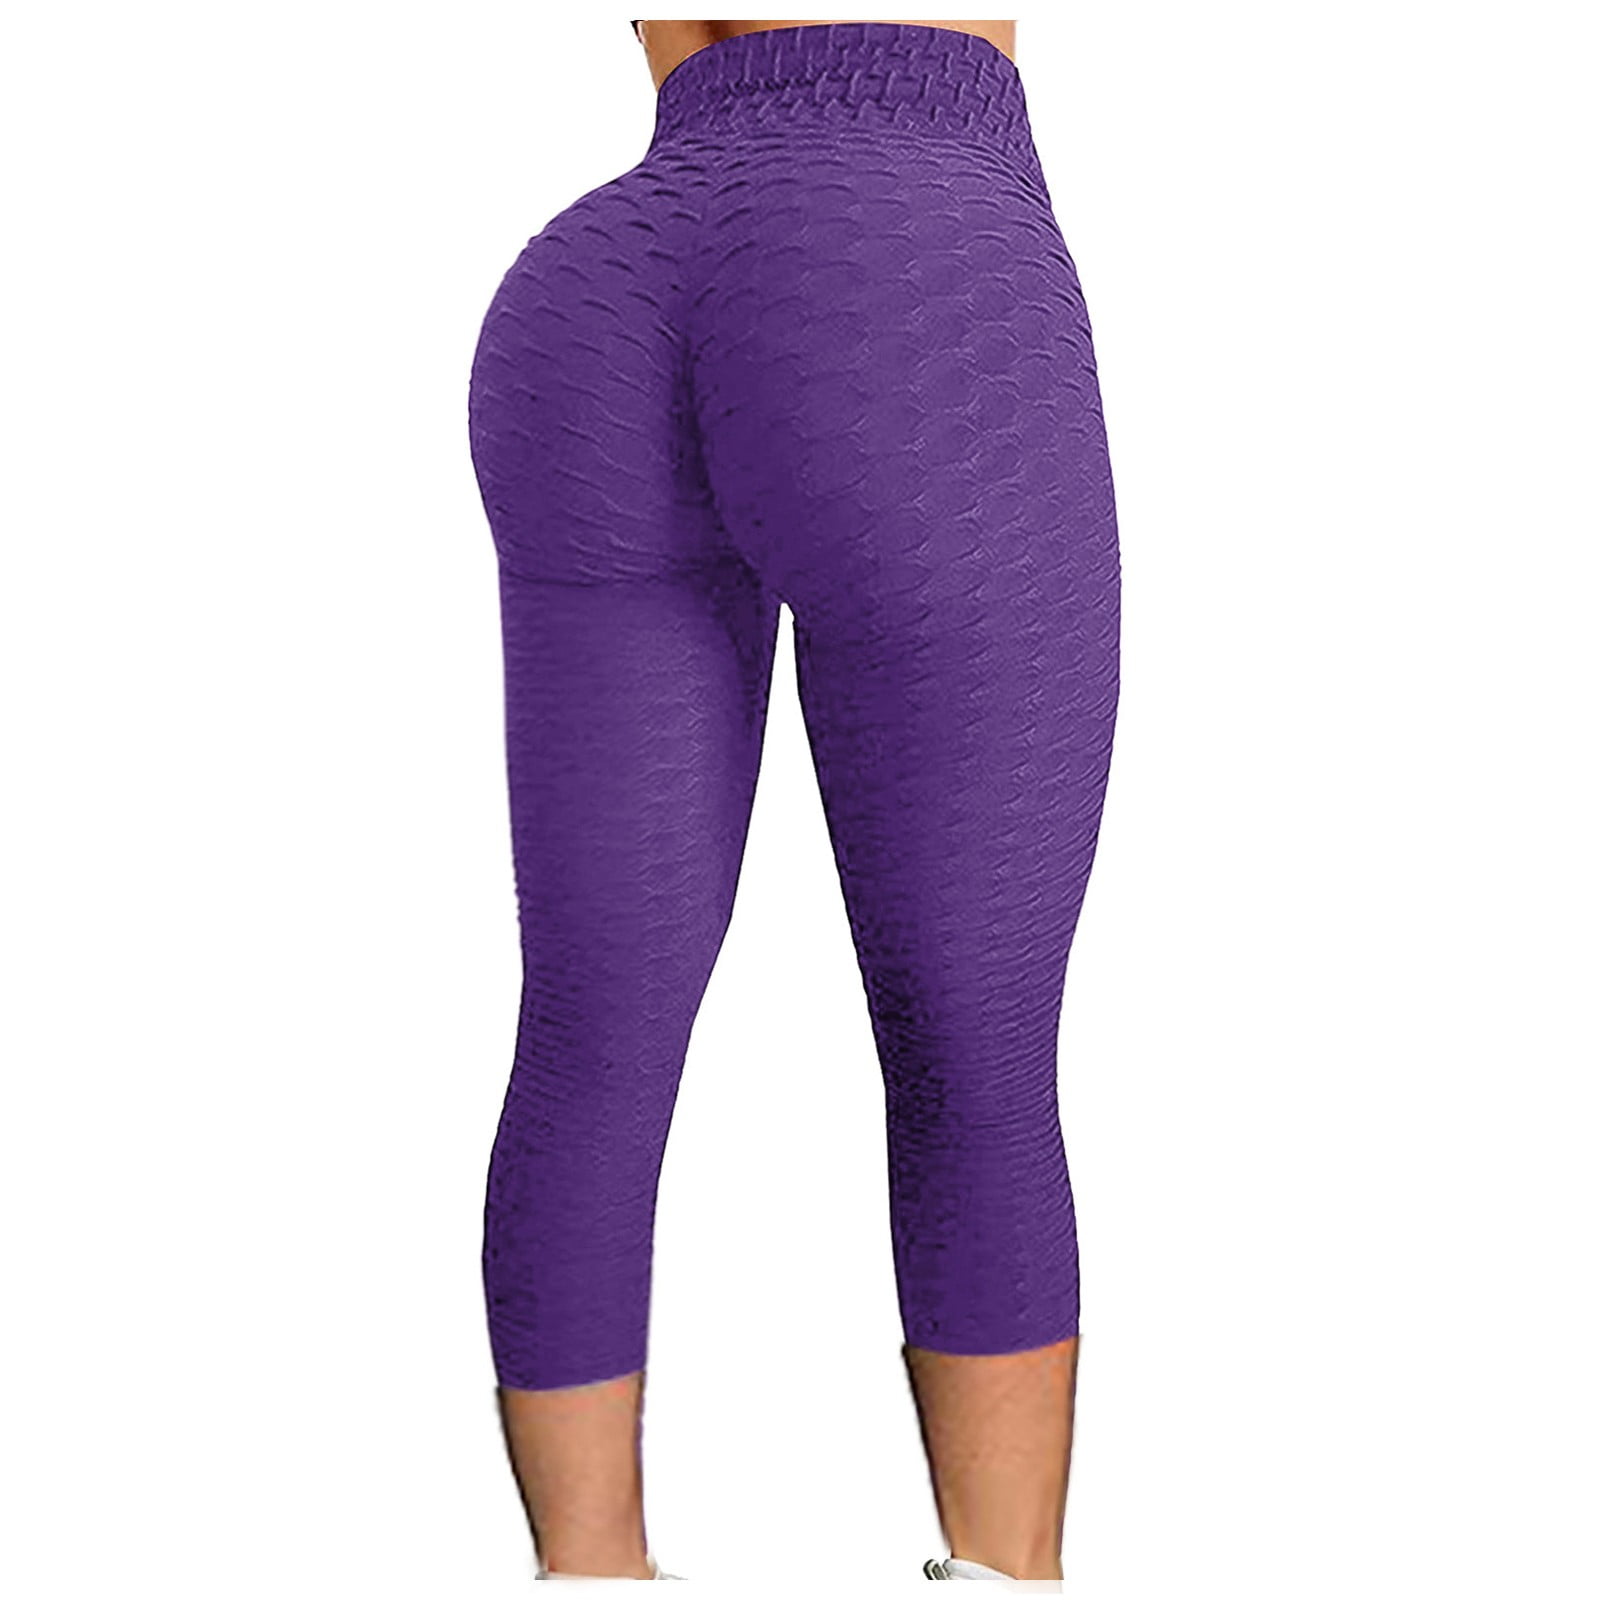 Aayomet Womens Yoga Pants Petite Bootcut Yoga Pants with